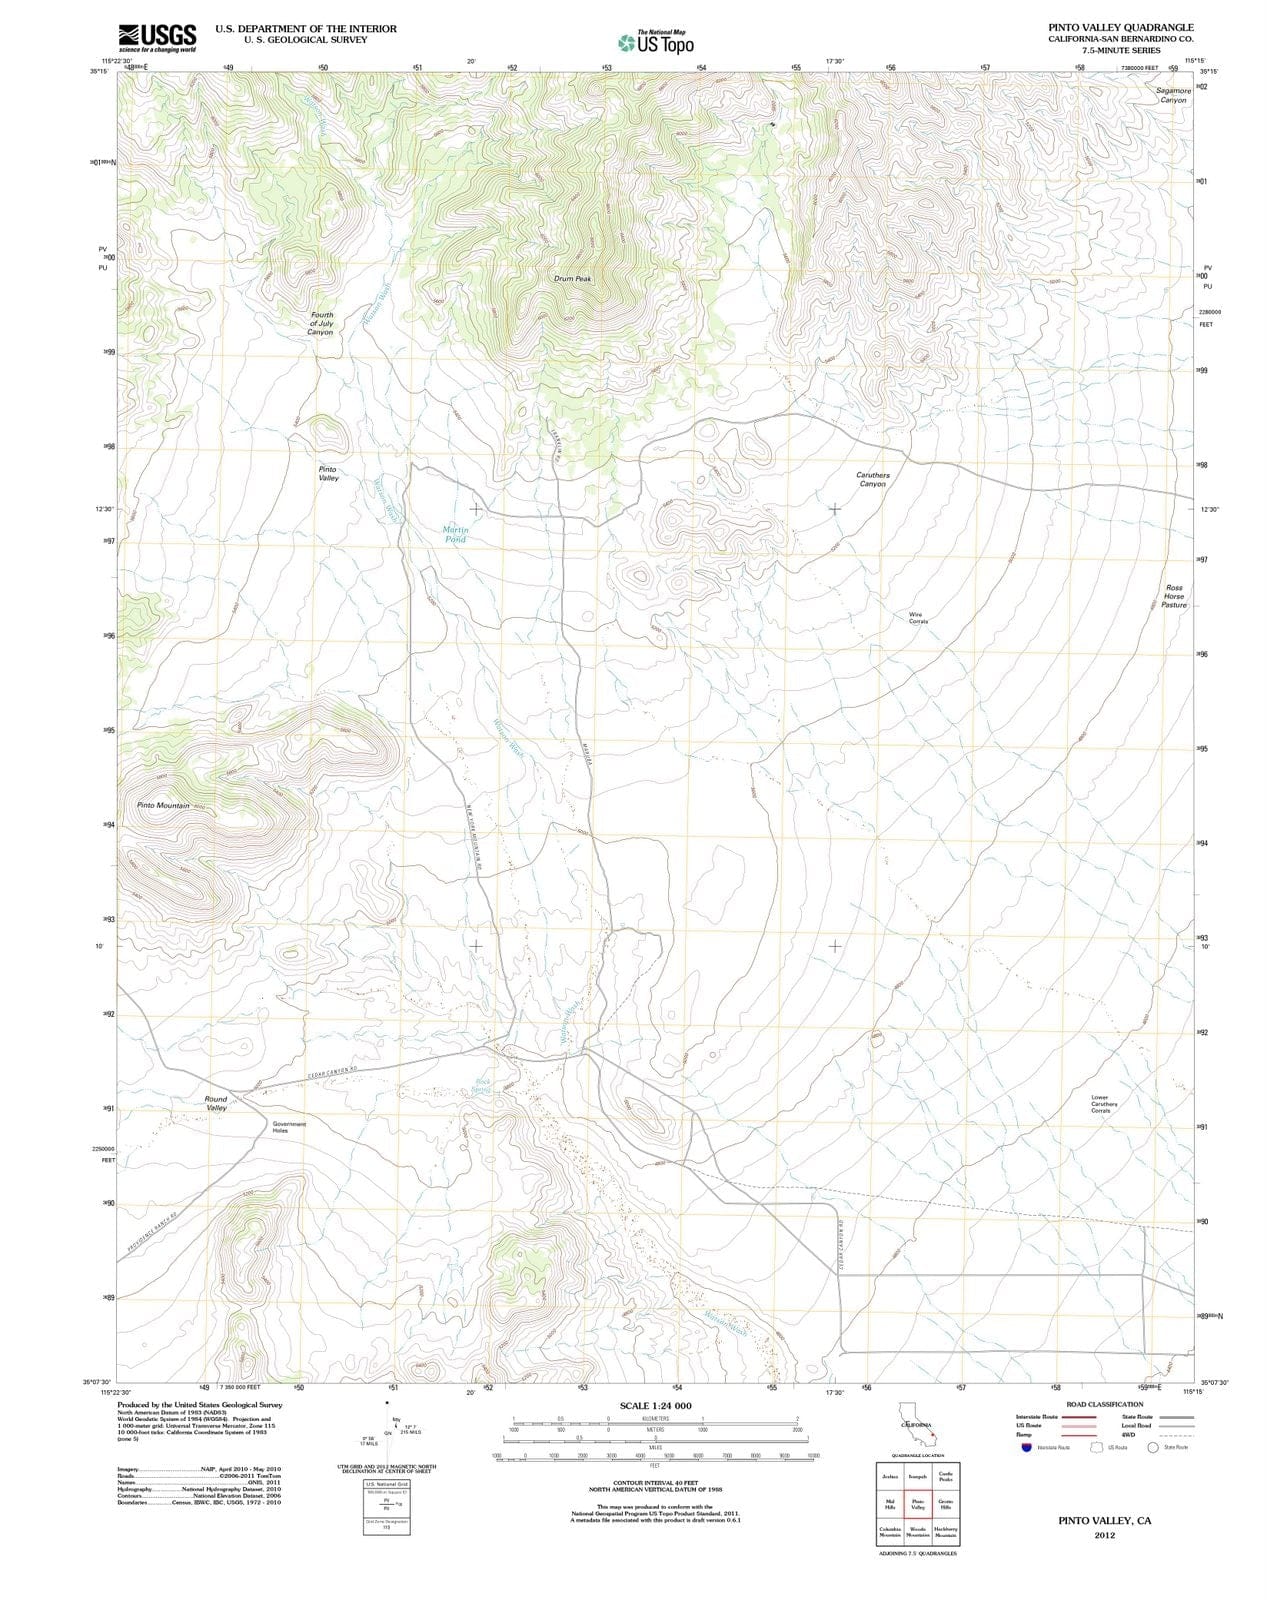 2012 Pinto Valley, CA - California - USGS Topographic Map